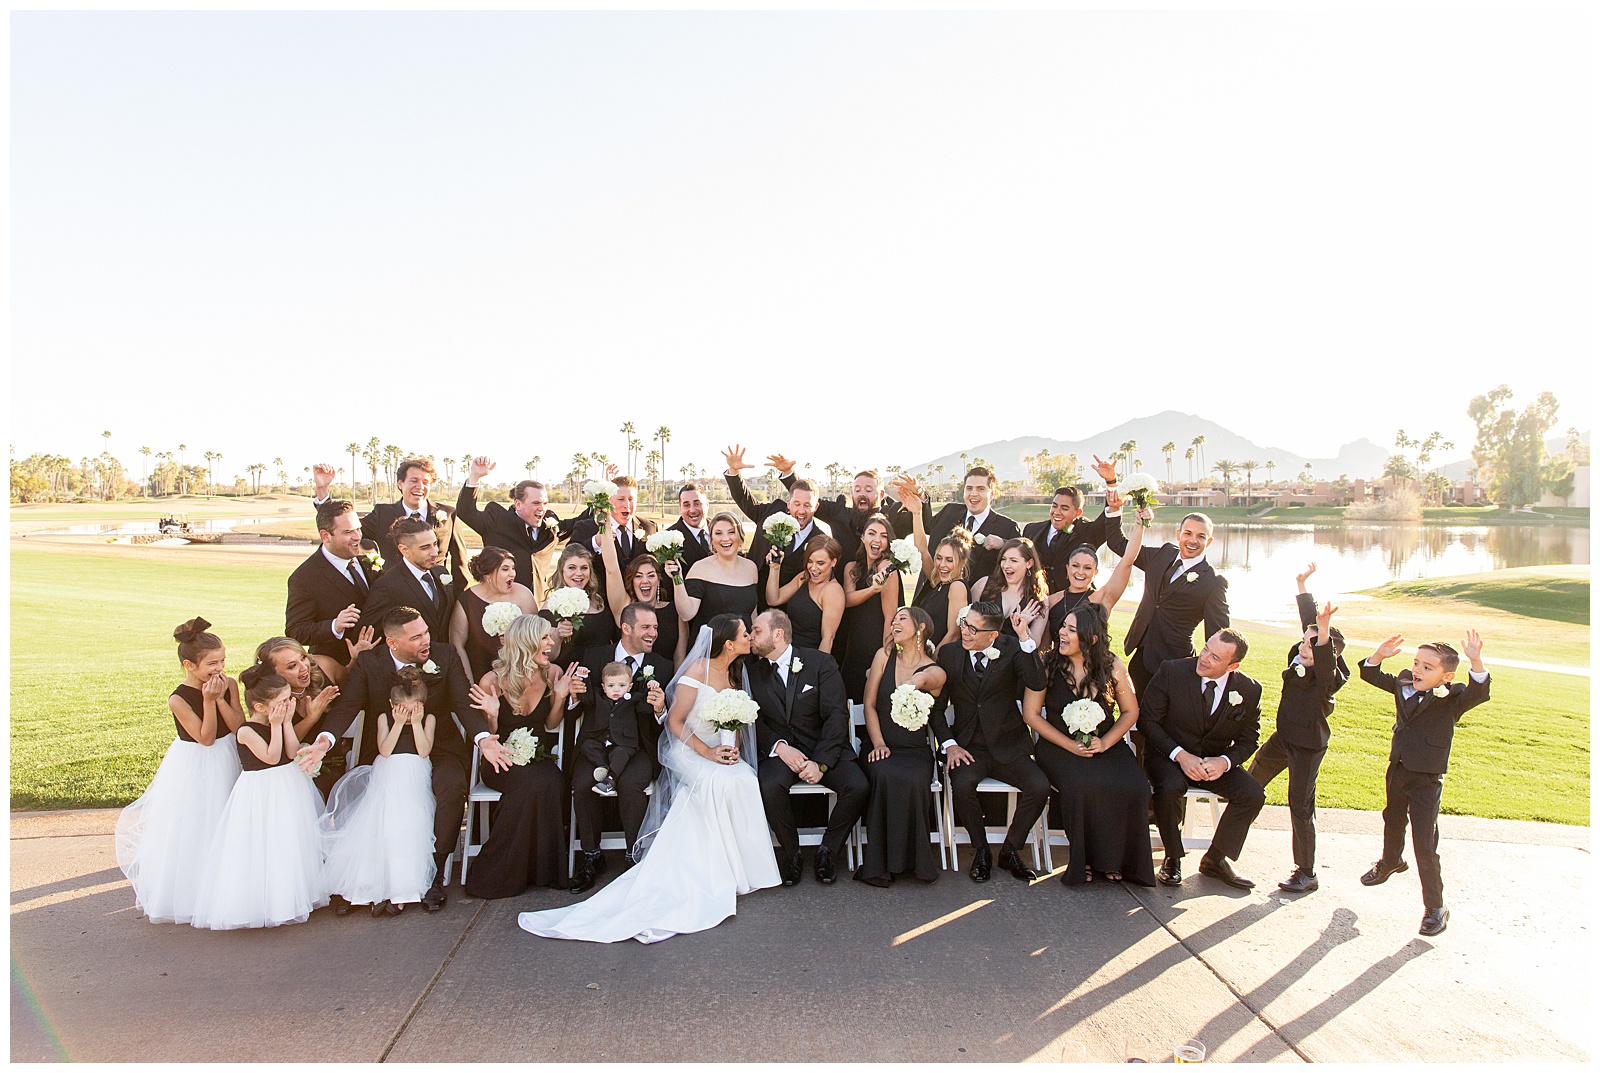 Fun Black Tie Wedding at McCormick Ranch Golf Club, Scottsdale AZ